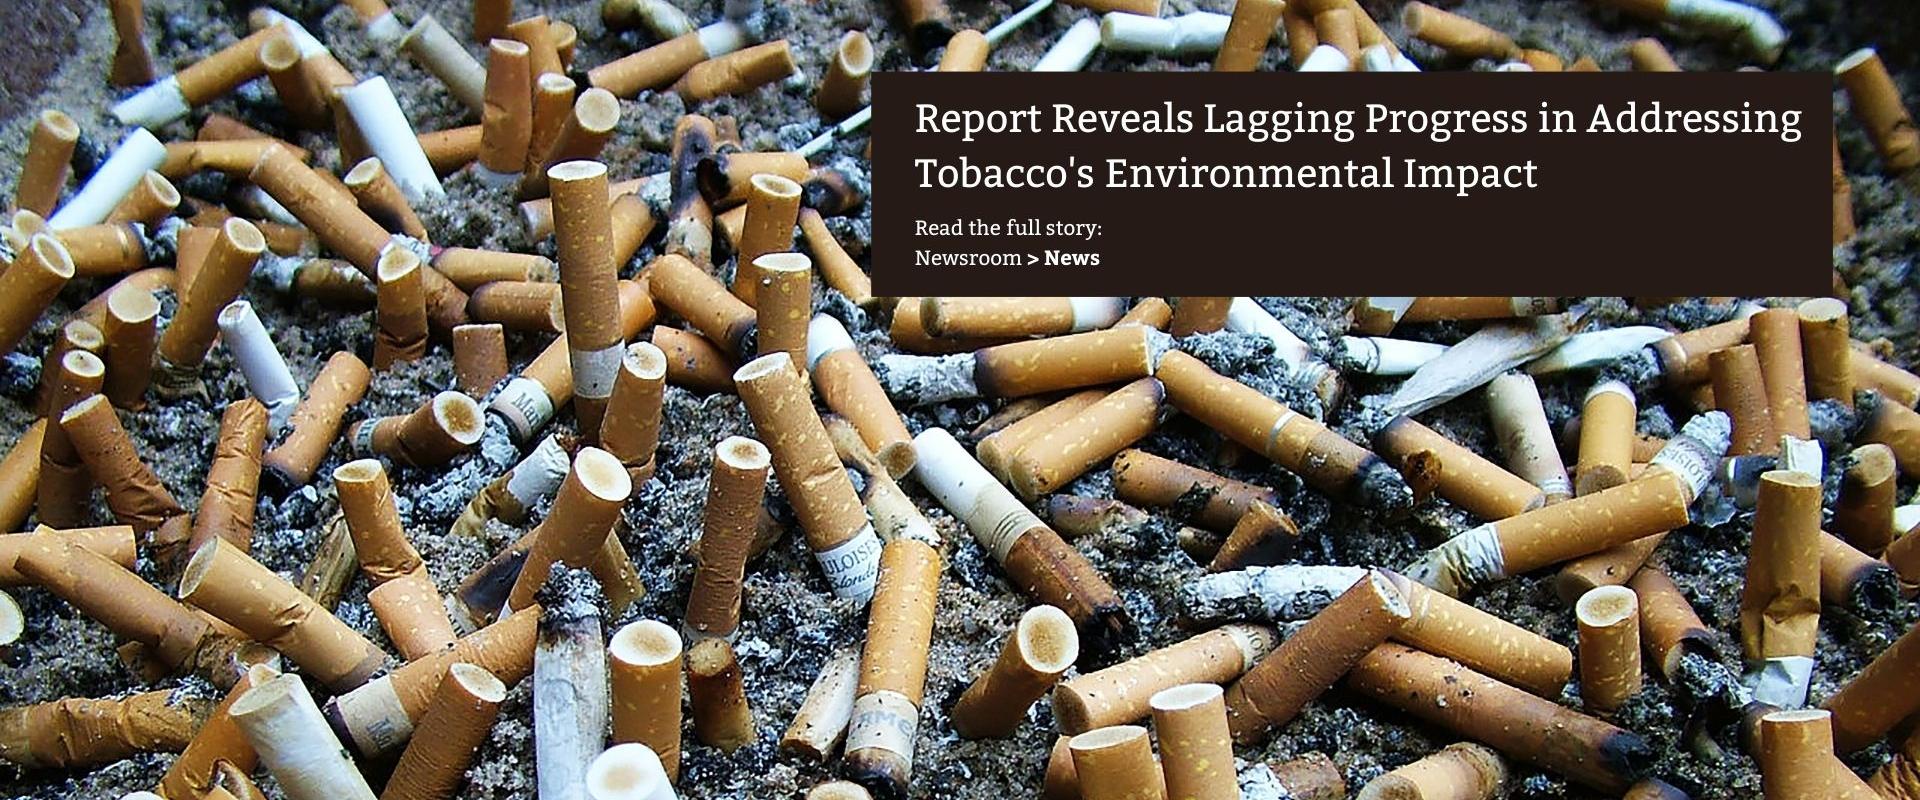 Report Reveals Lagging Progress in Addressing Tobacco's Environmental Impact